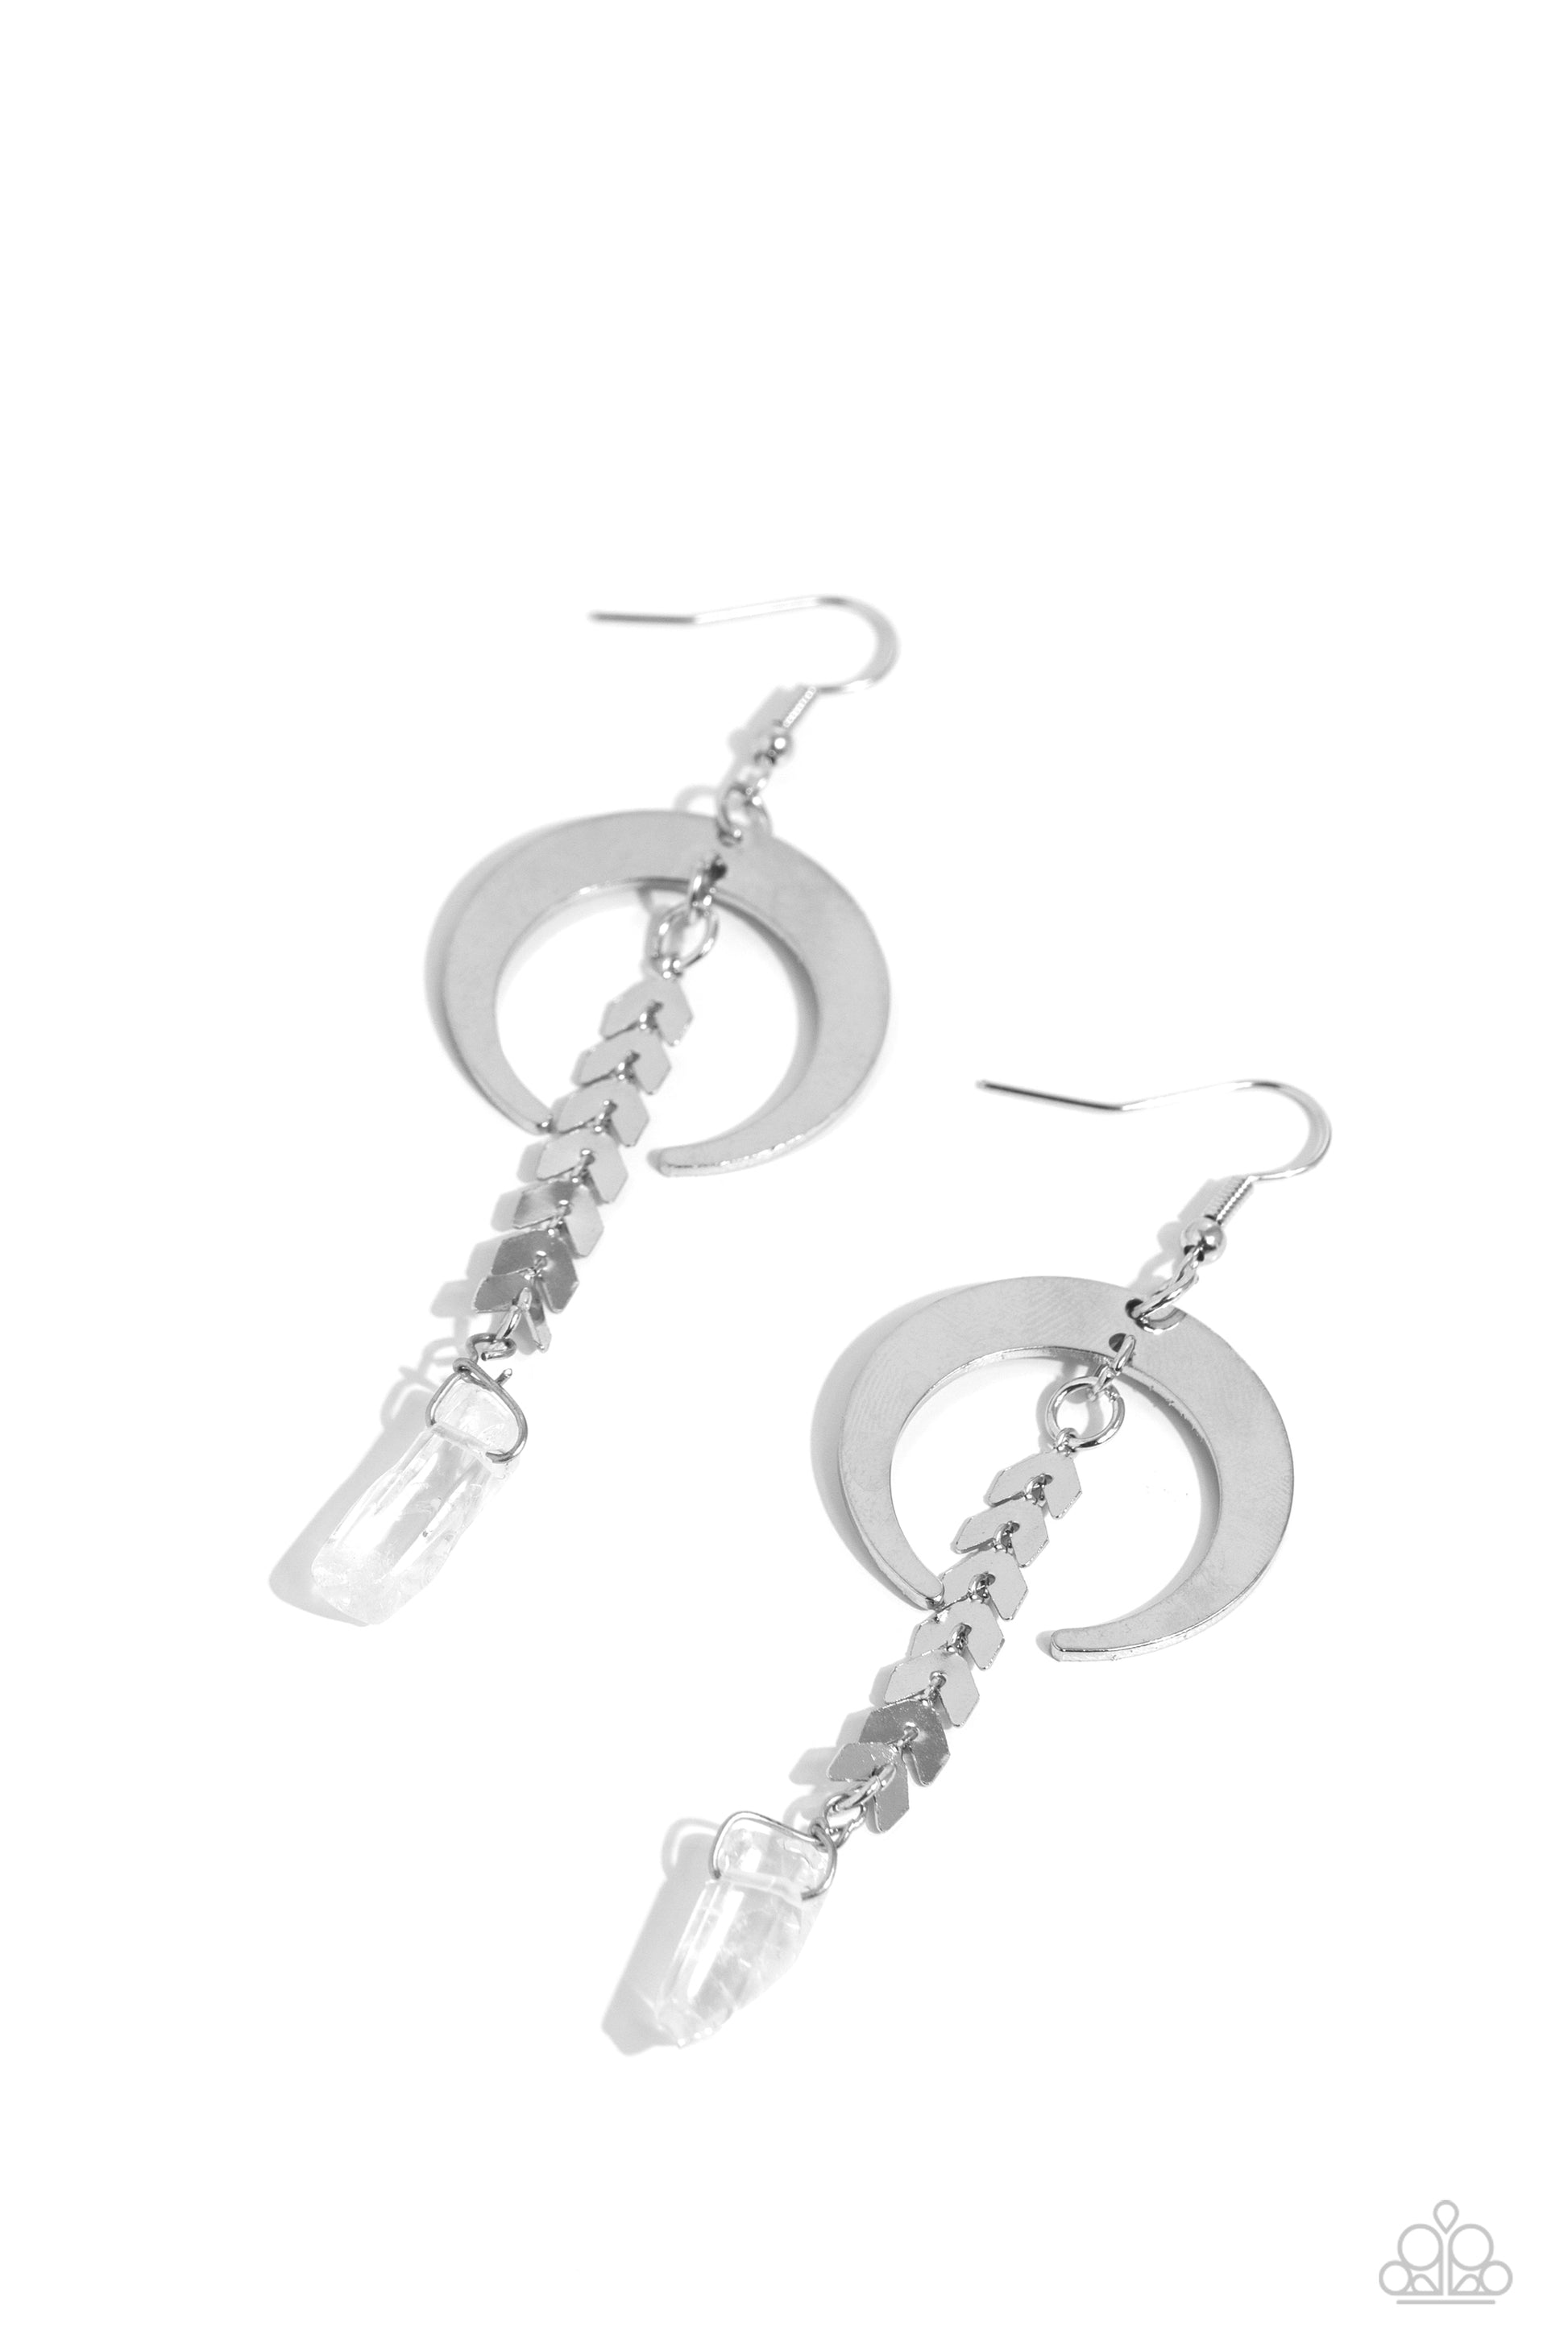 Lounging Laurel - white - Paparazzi earrings